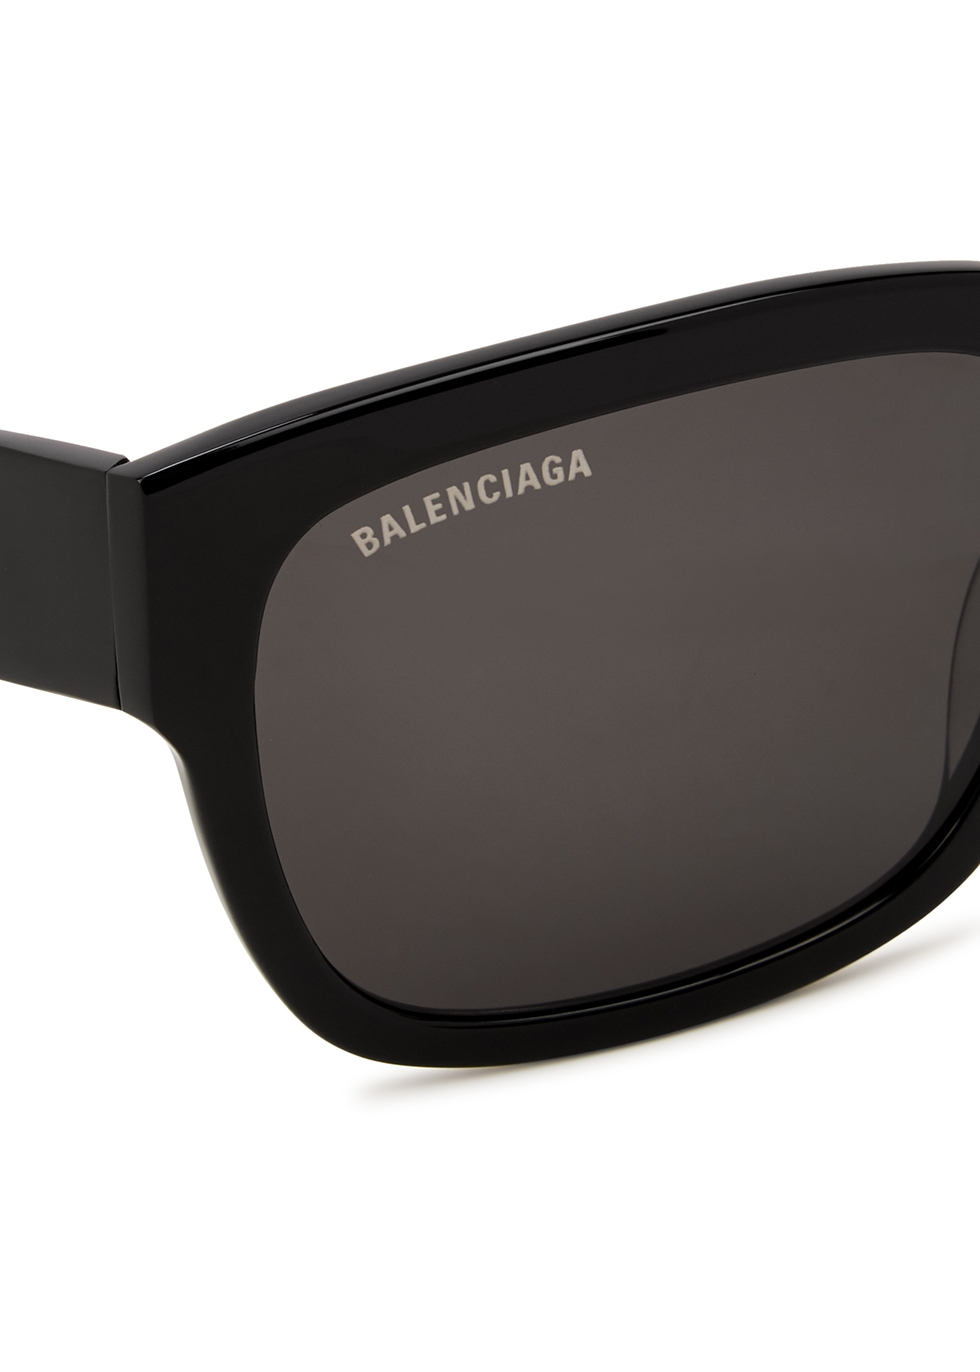 Balenciaga Black Sunglasses for Women  Mercari